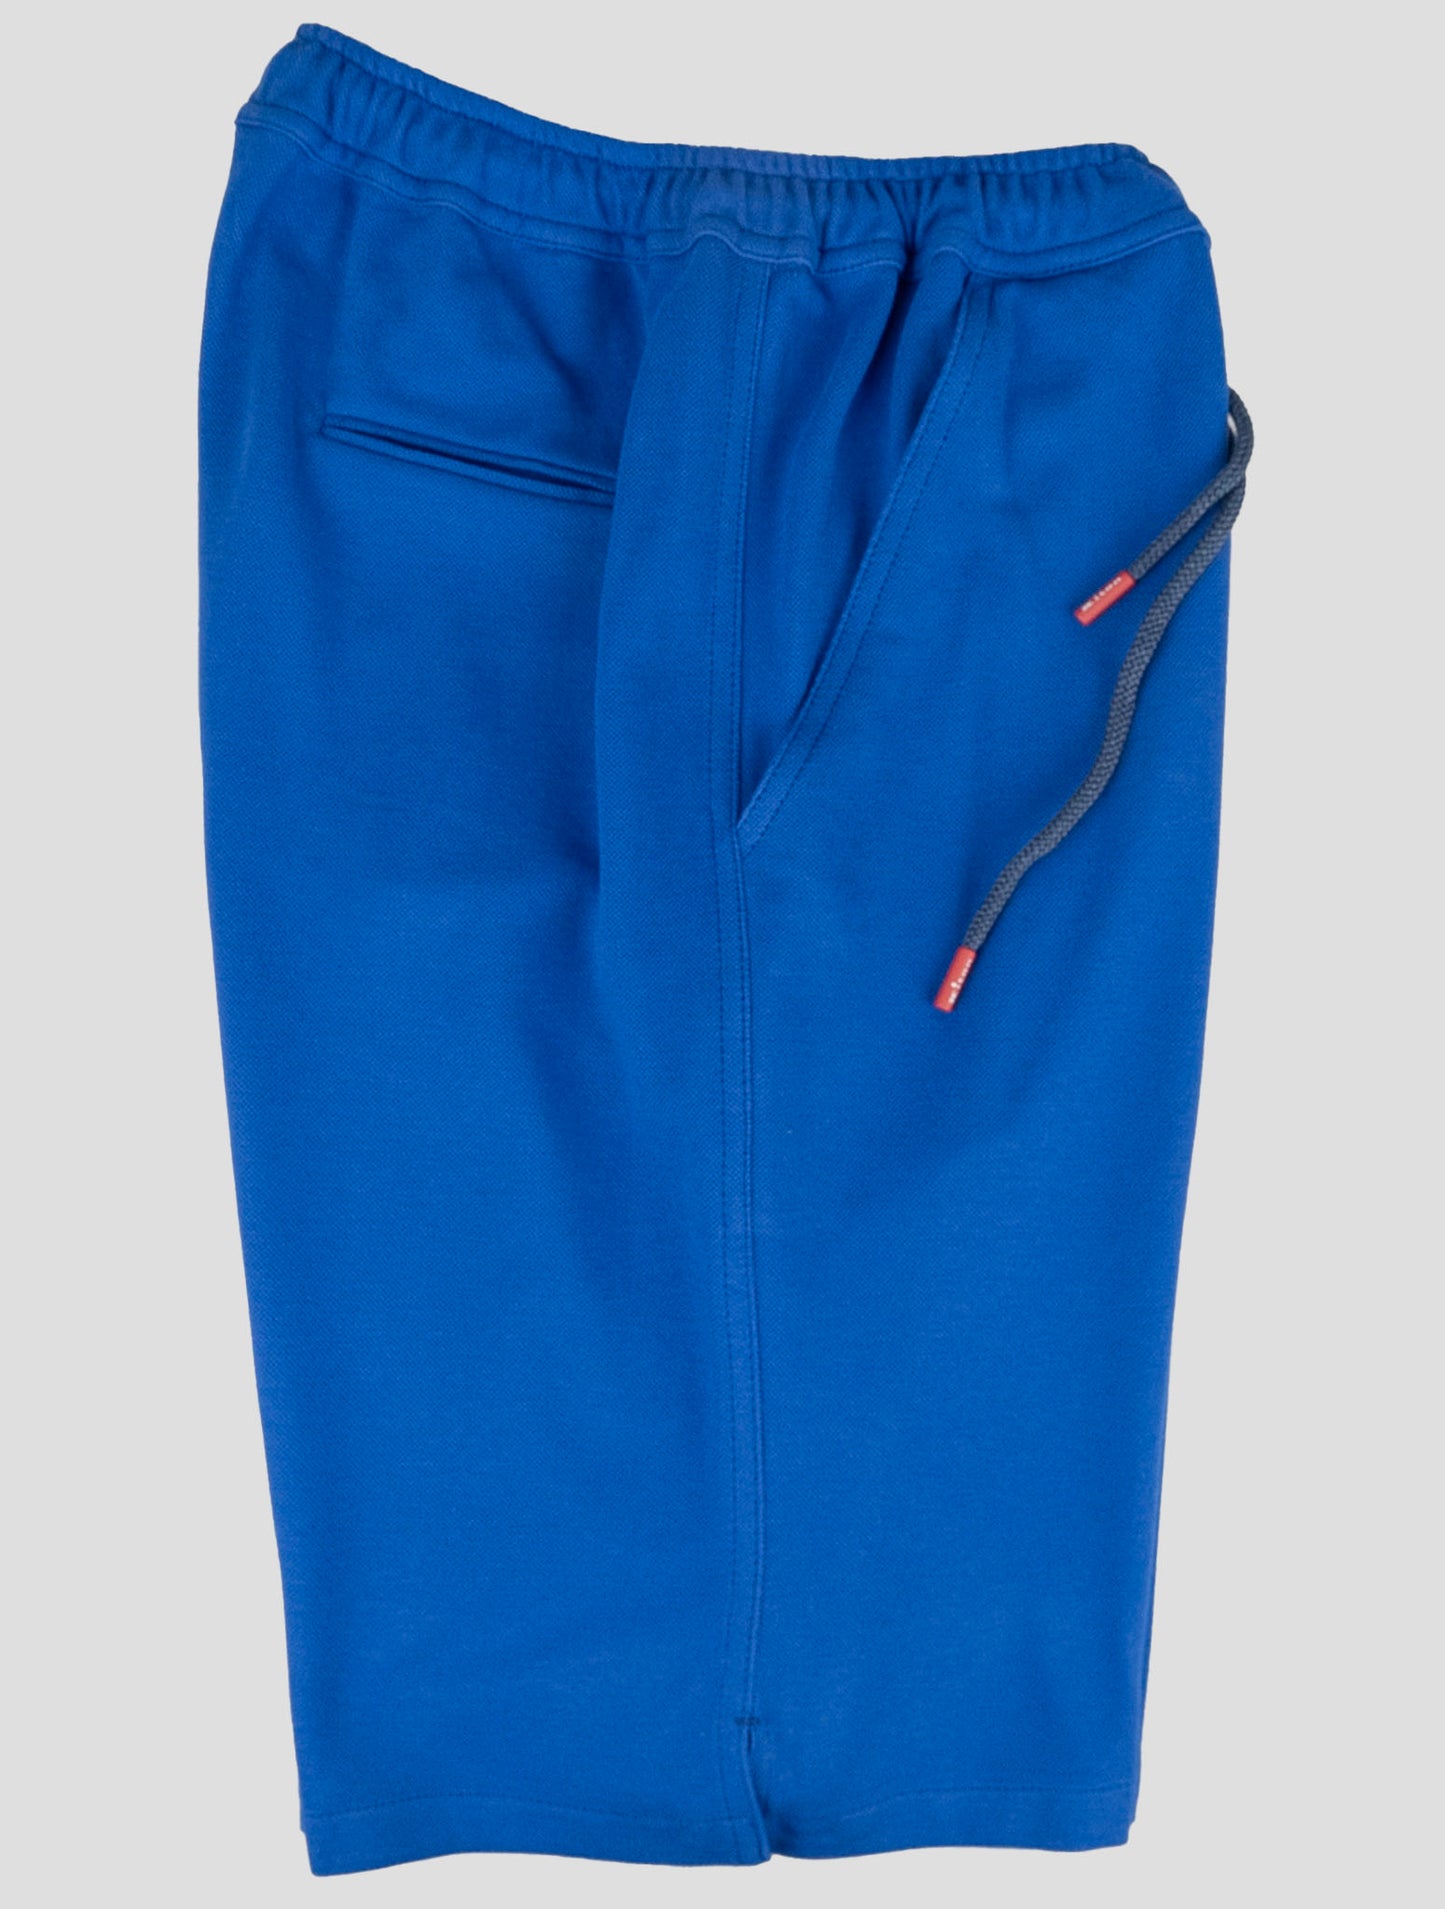 Kiton Matching Outfit-Grauer Mariano und blauer Kurzhose Trainings anzug